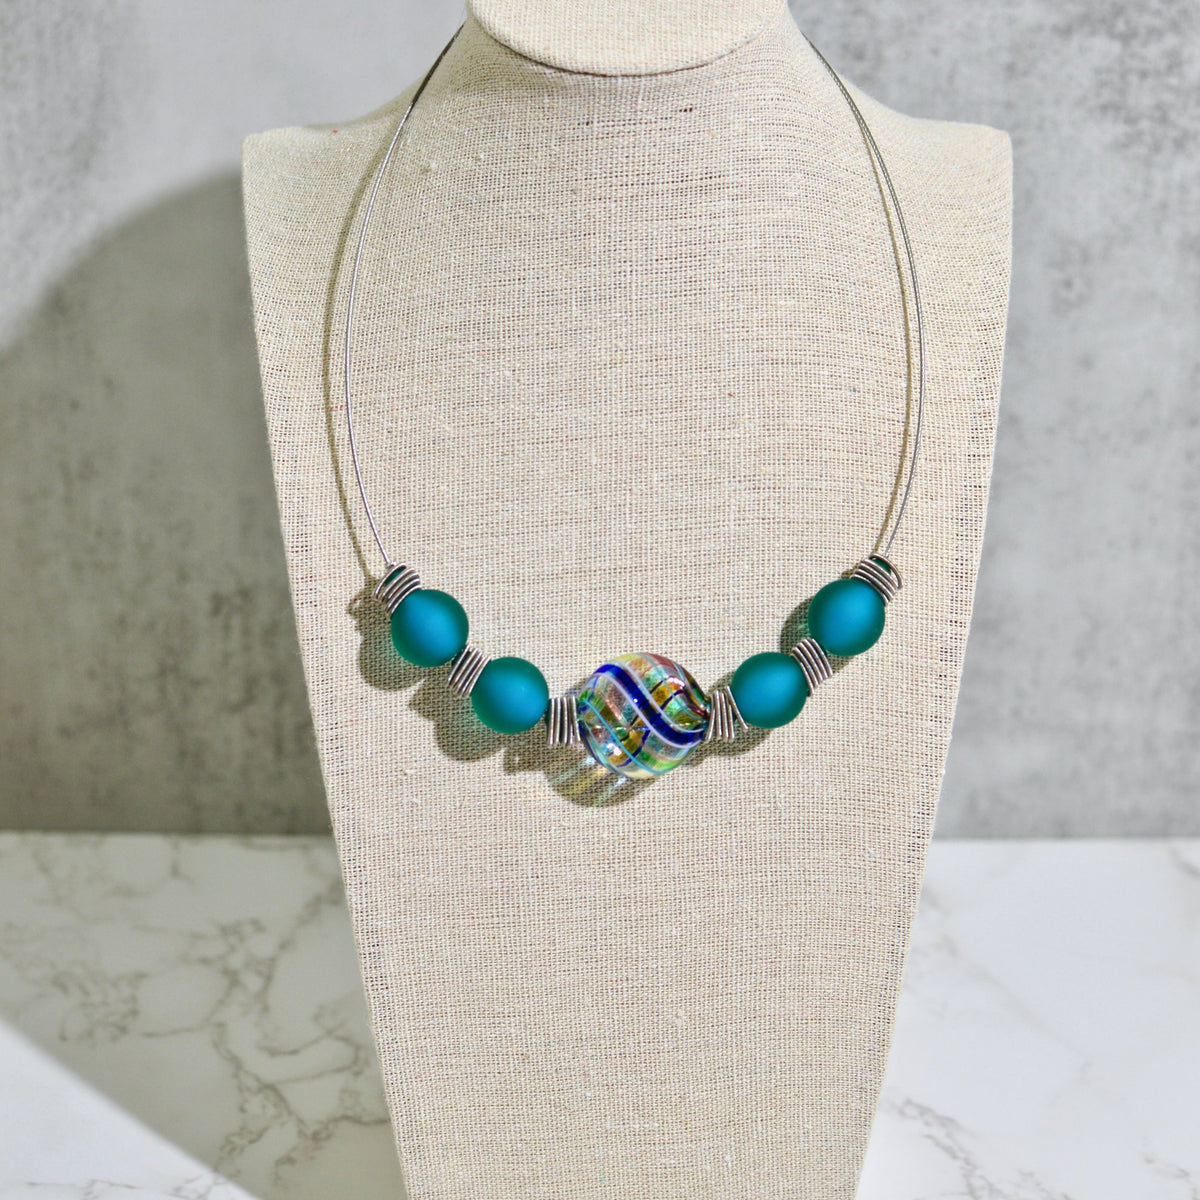 Monica1 Murano Glass Bead Statement Necklace, Made in Italy - My Italian Decor